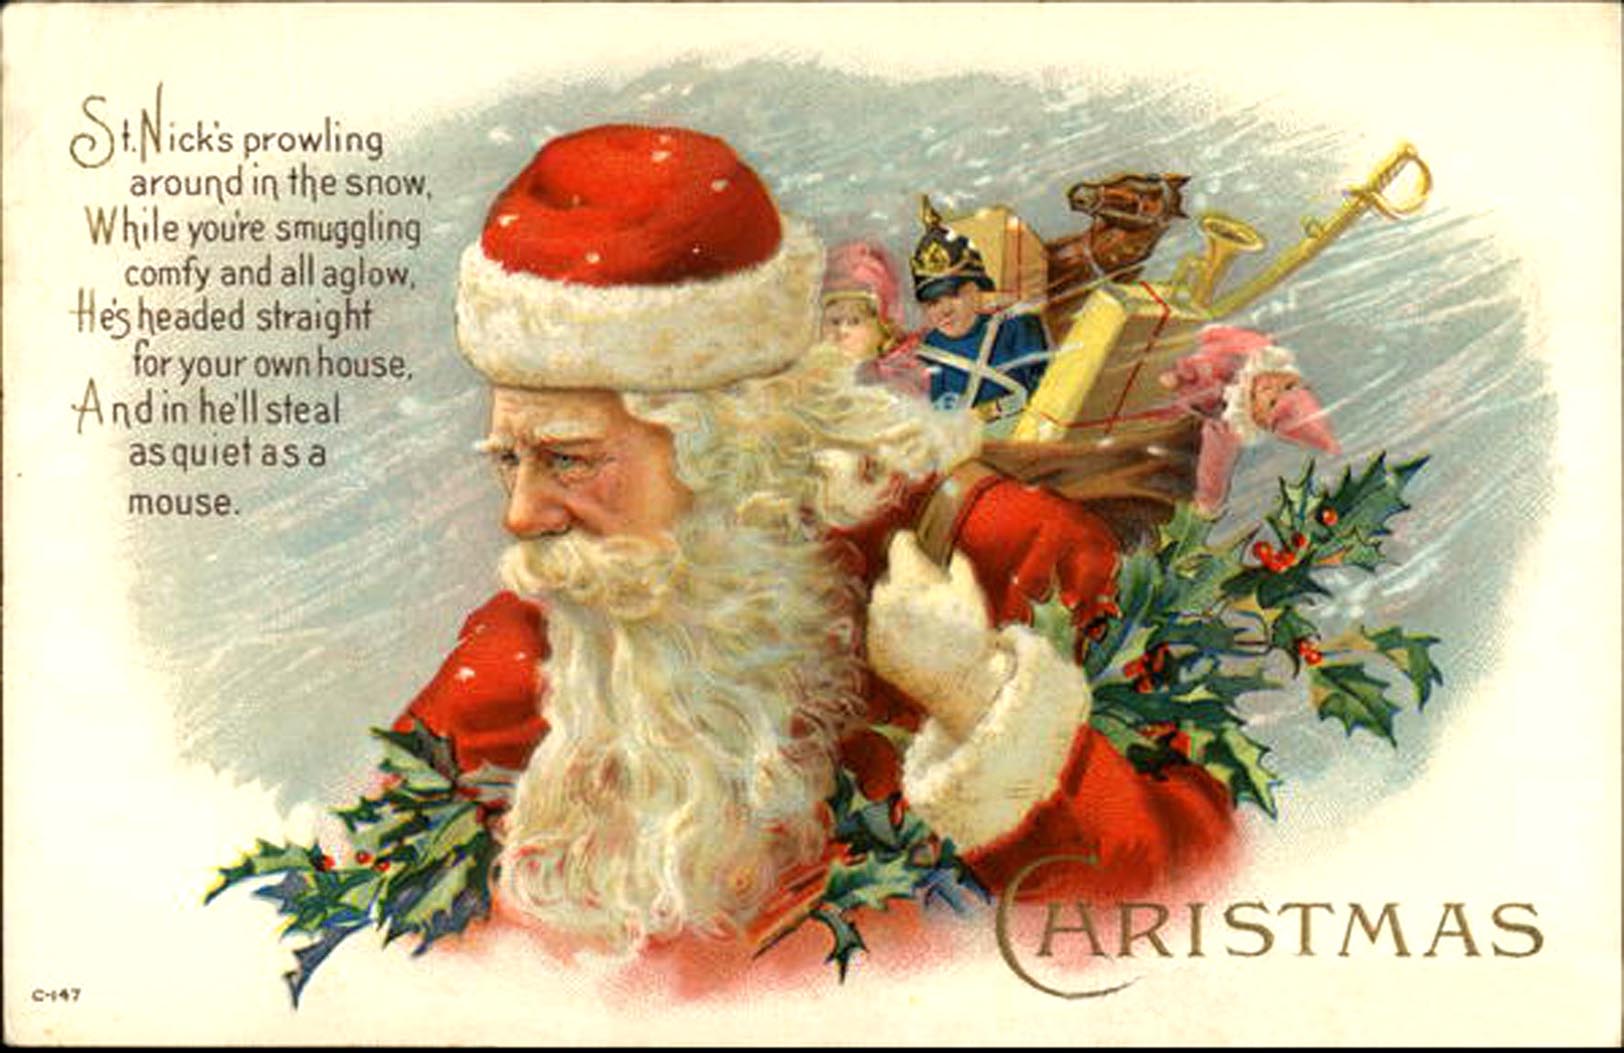 Santa, filling stockings on Christmas Eve night